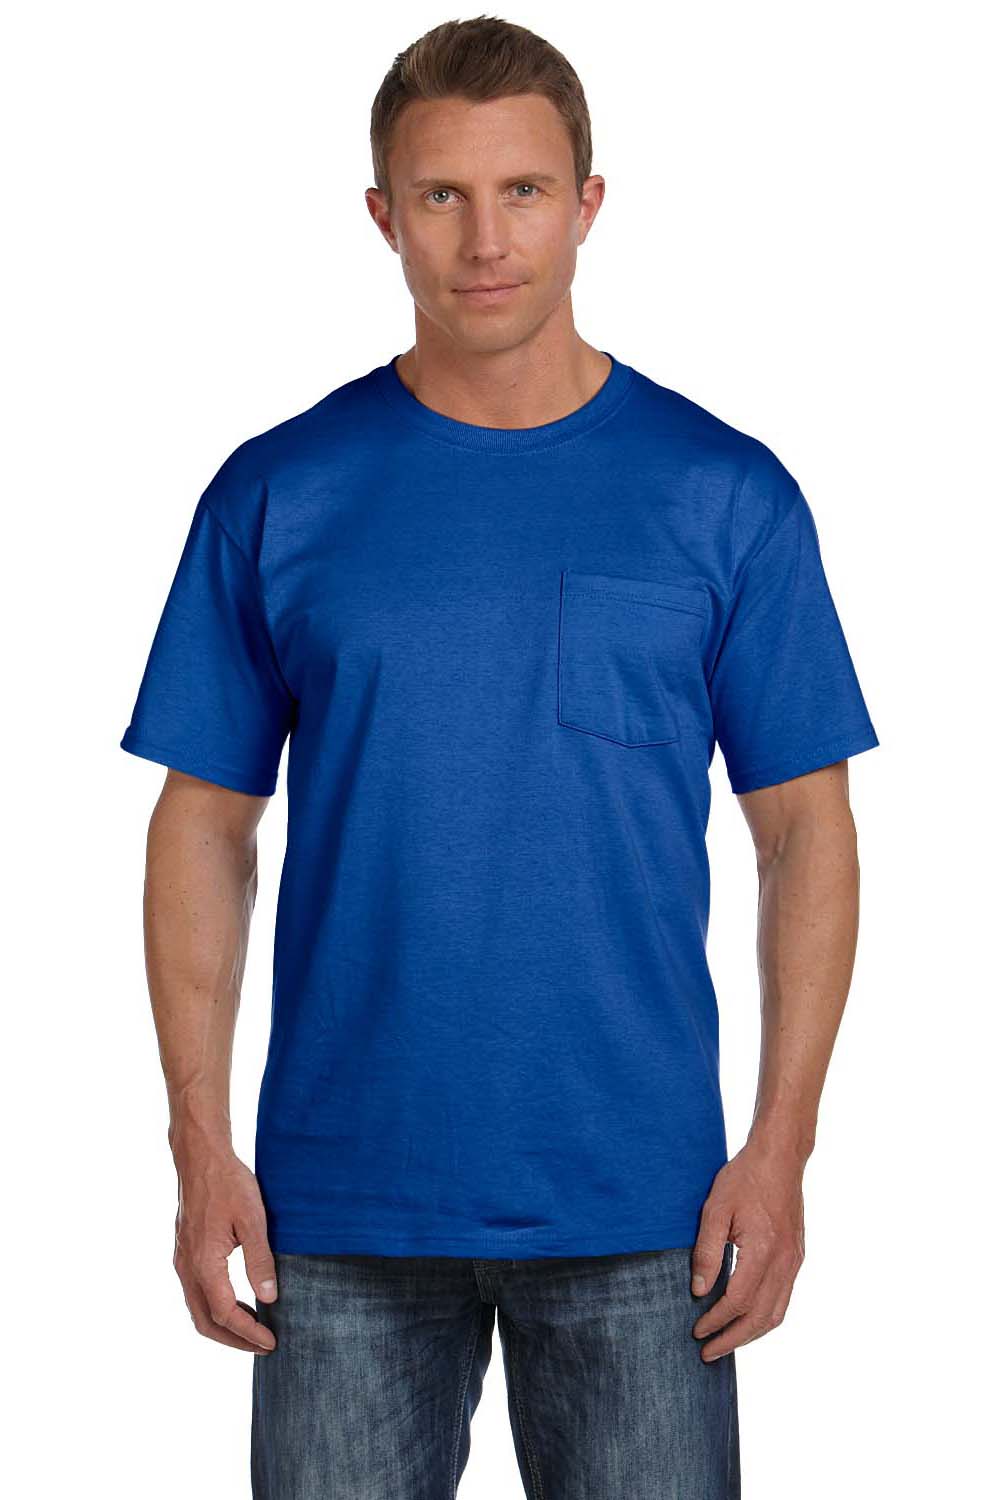 Fruit Of The Loom 3931P Mens HD Jersey Short Sleeve Crewneck T-Shirt w/ Pocket Royal Blue Front